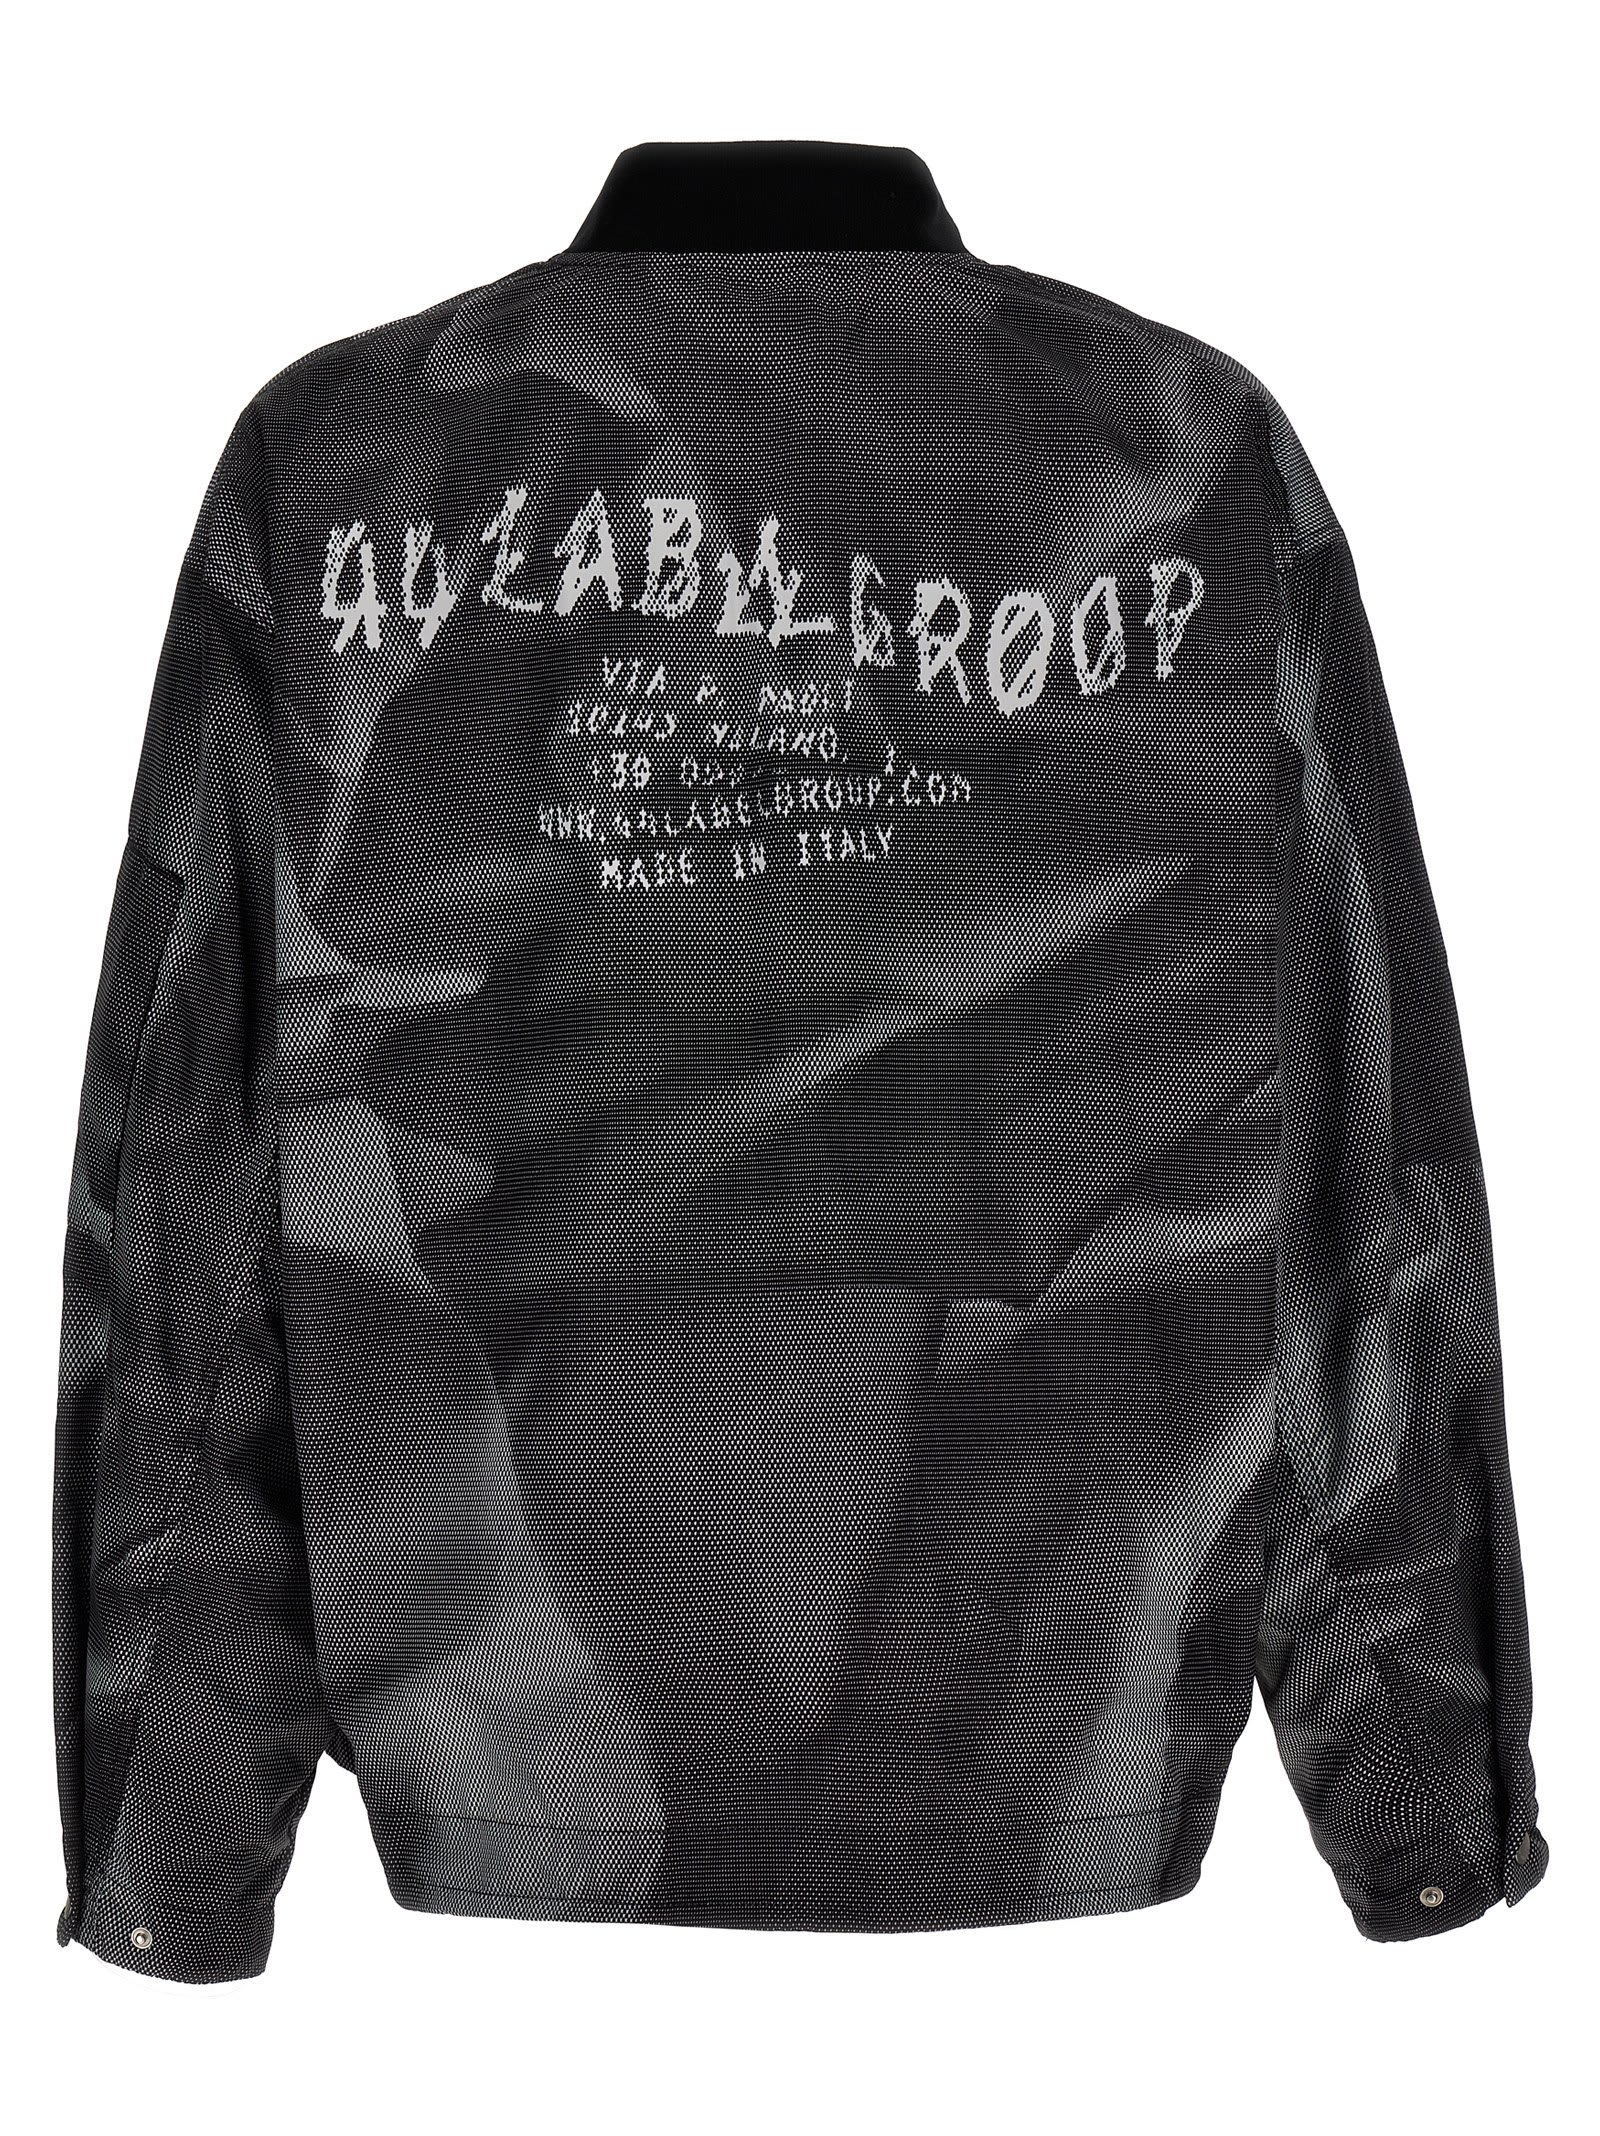 Shop 44 Label Group Crinkle Bomber Jacket In Gray